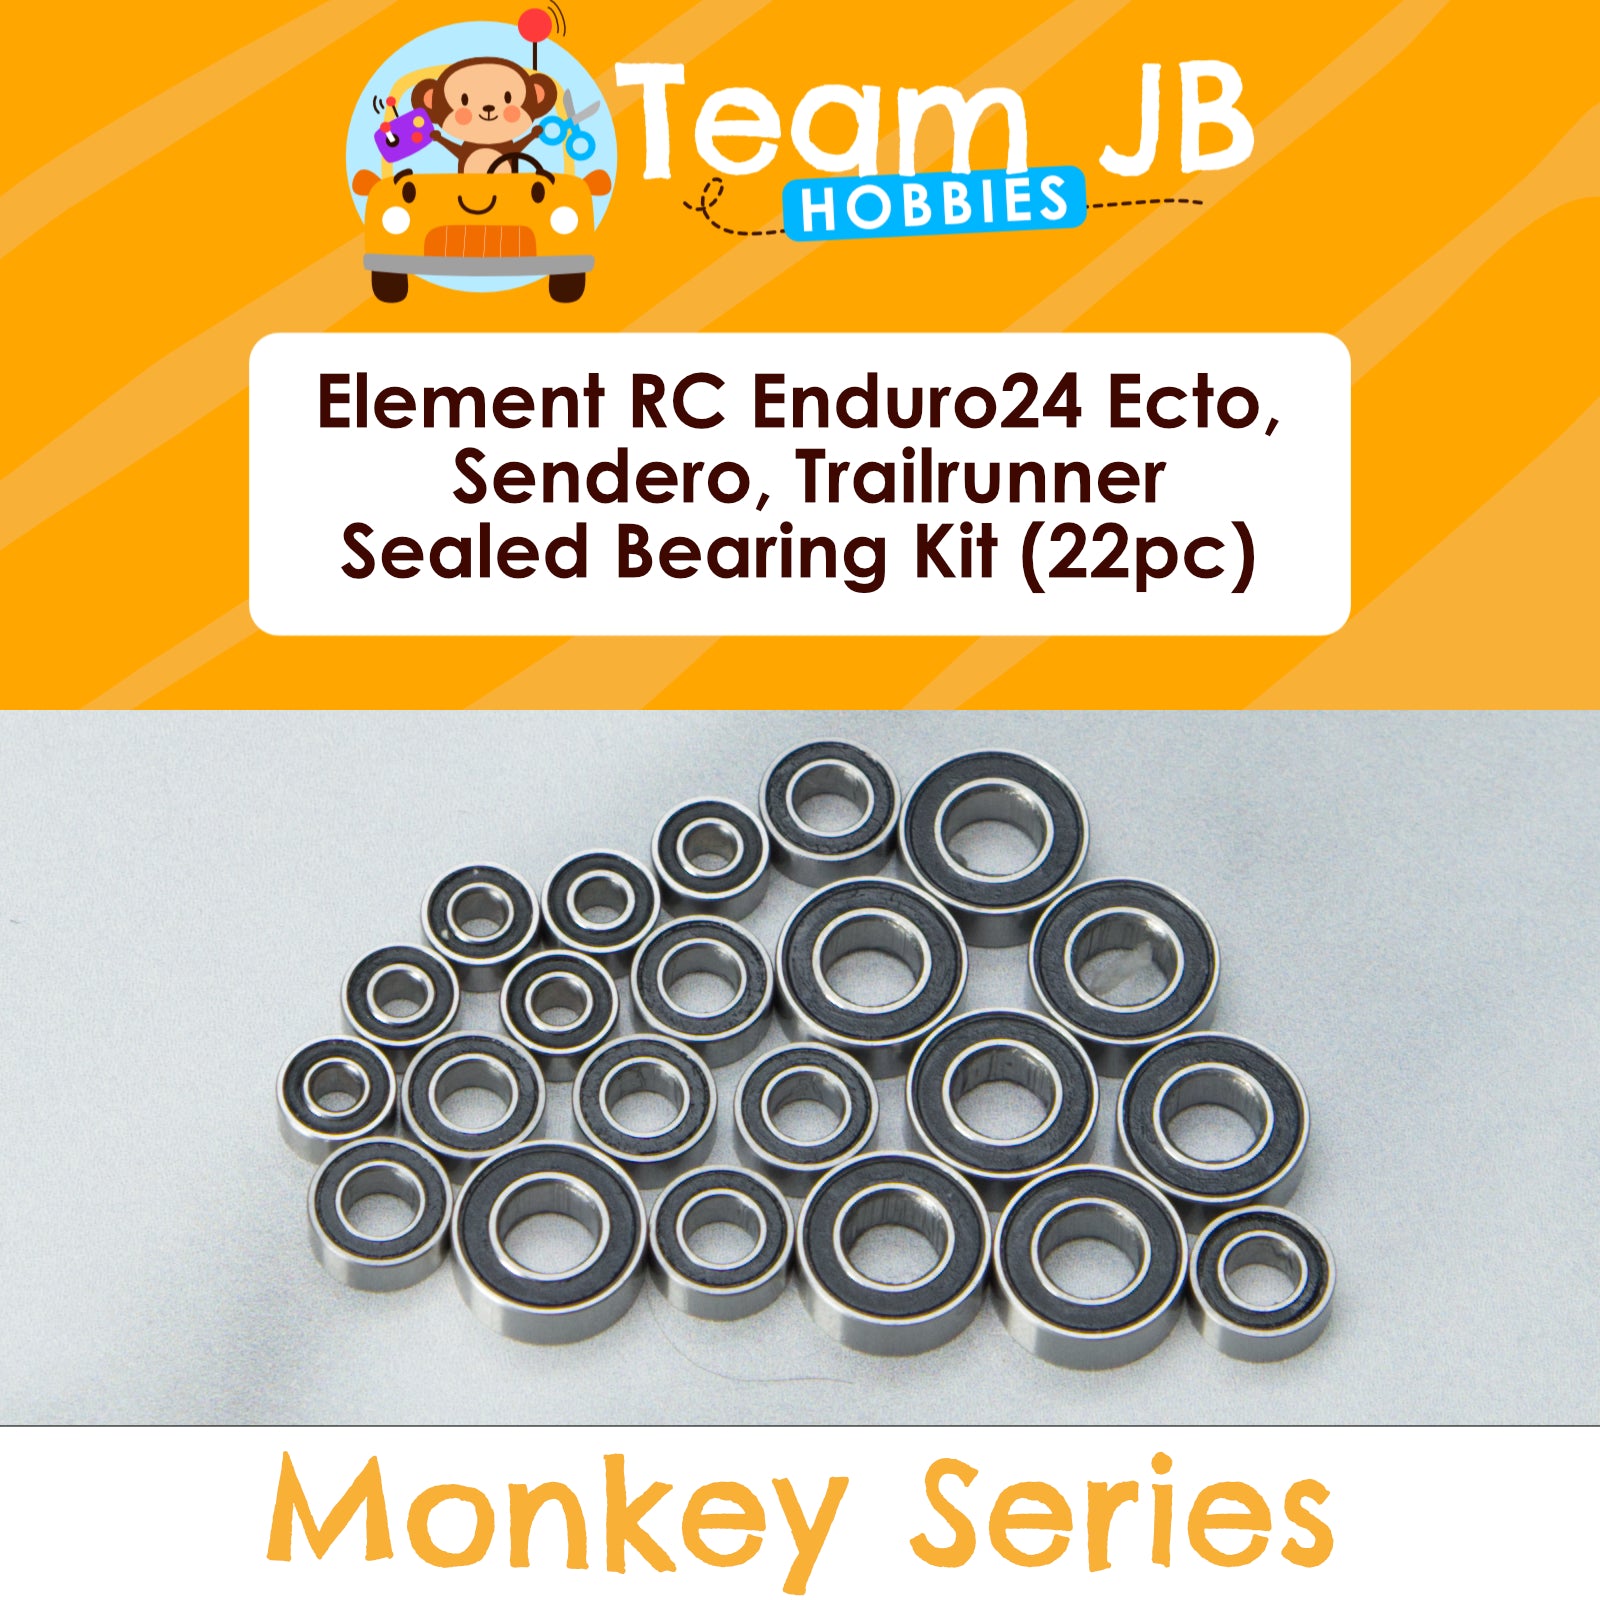 Element RC Enduro24 Ecto, Sendero, Trailrunner - Sealed Bearing Kit